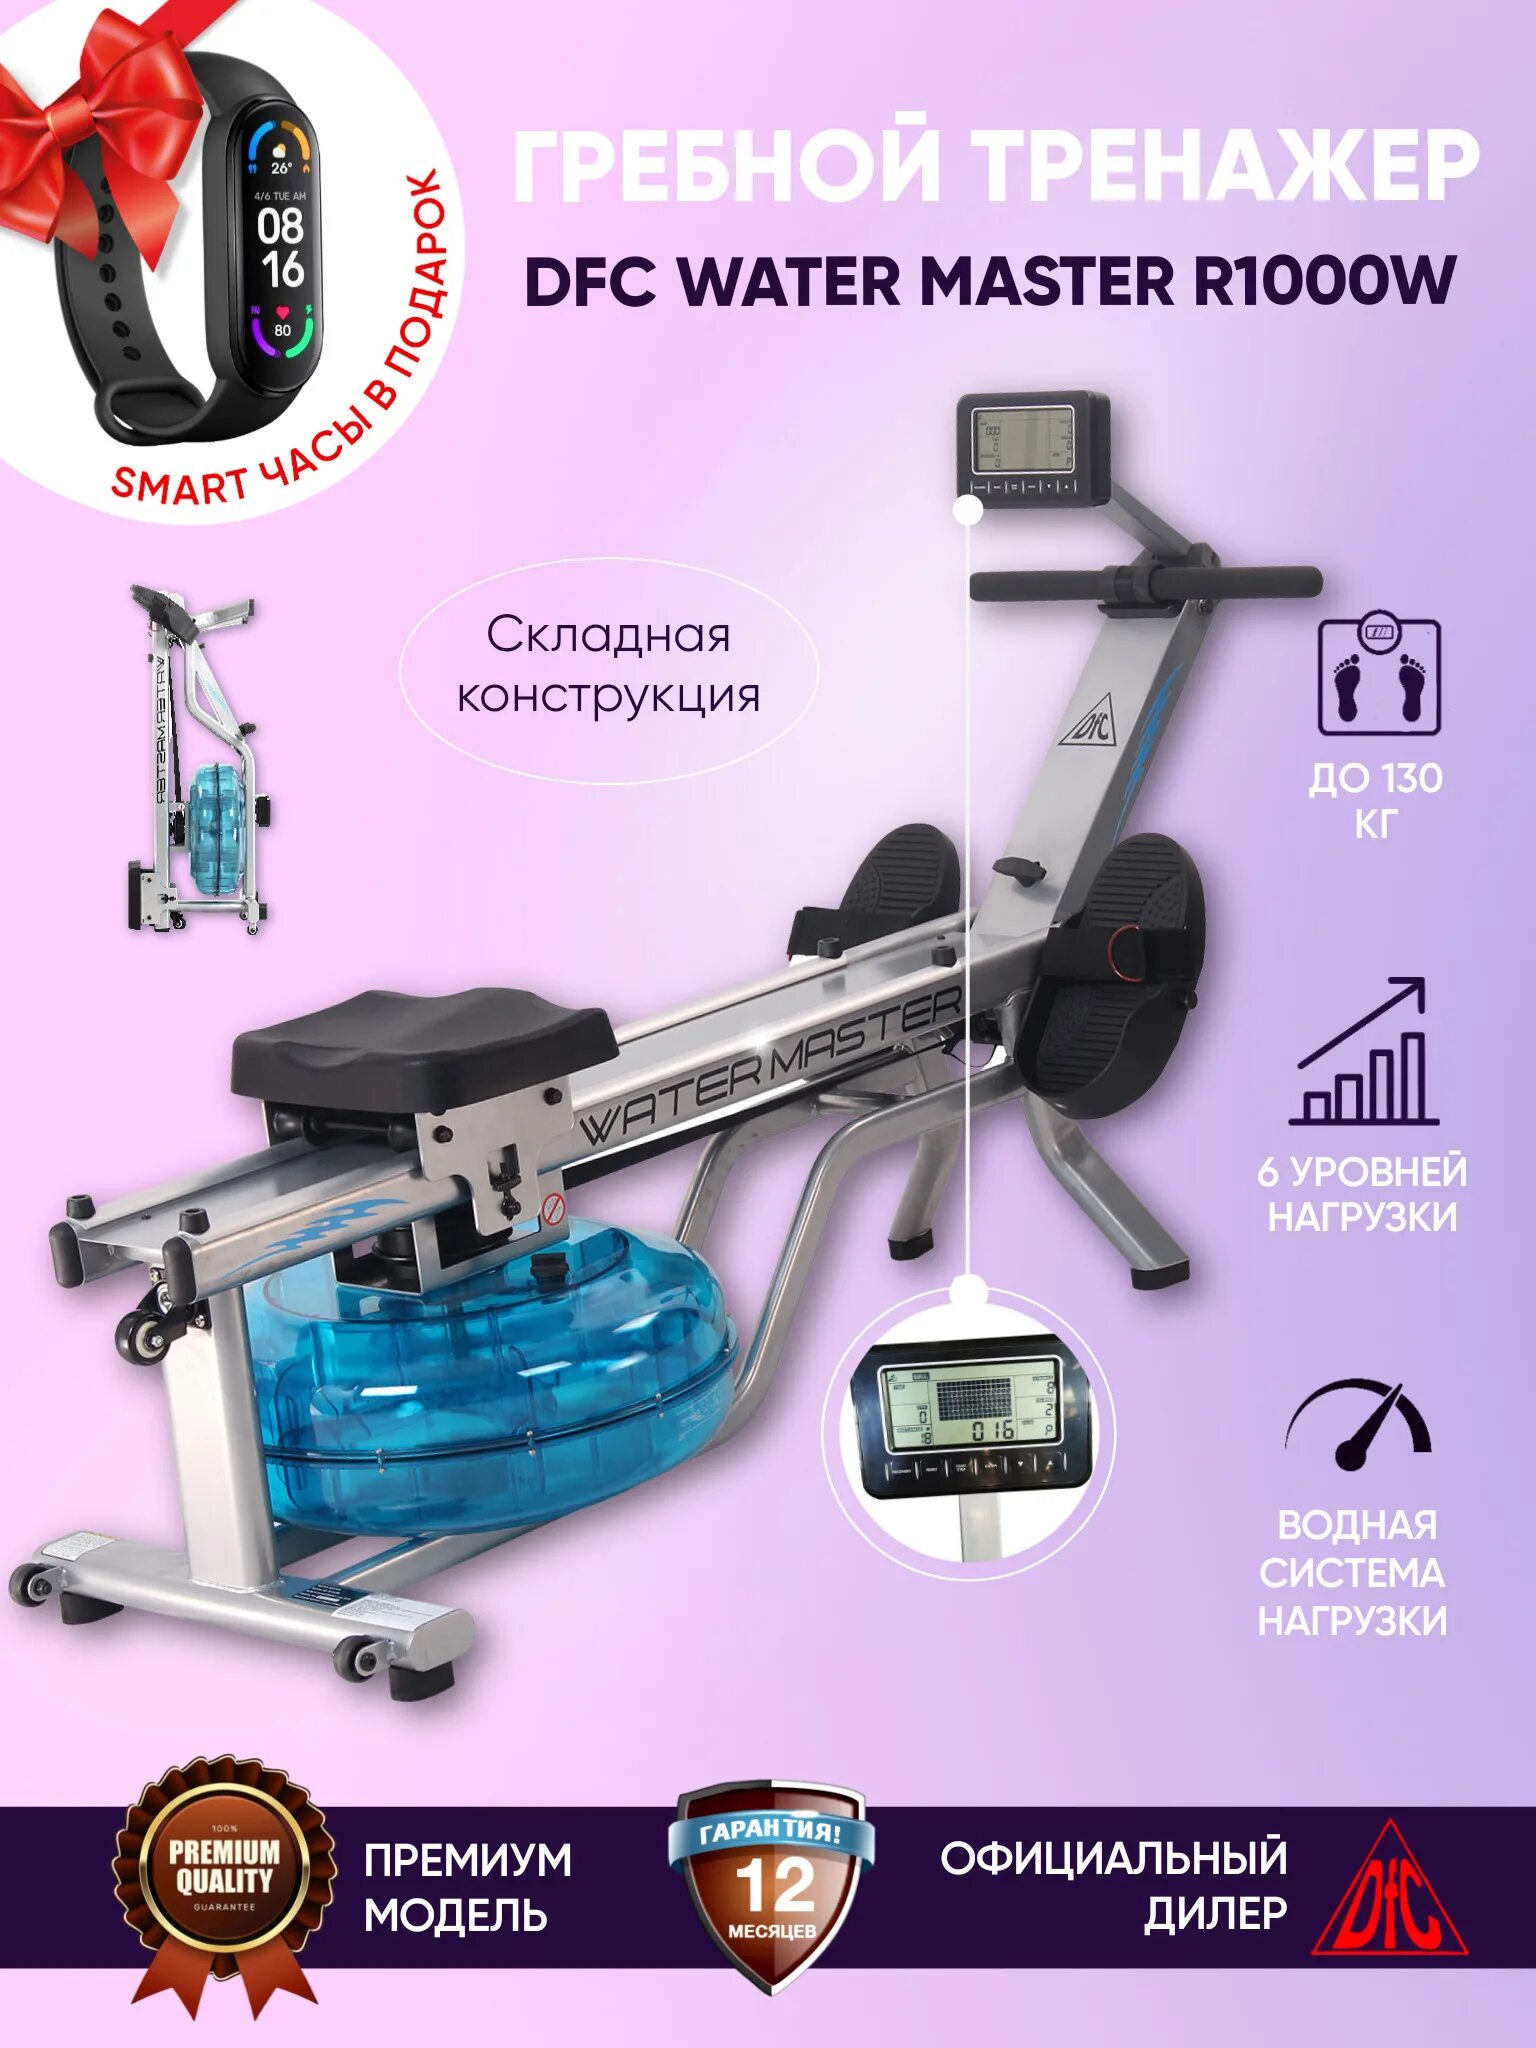 Master water. Гребной тренажер DFC Water Master r1000w. Гребной тренажер МС-72 отзывы.